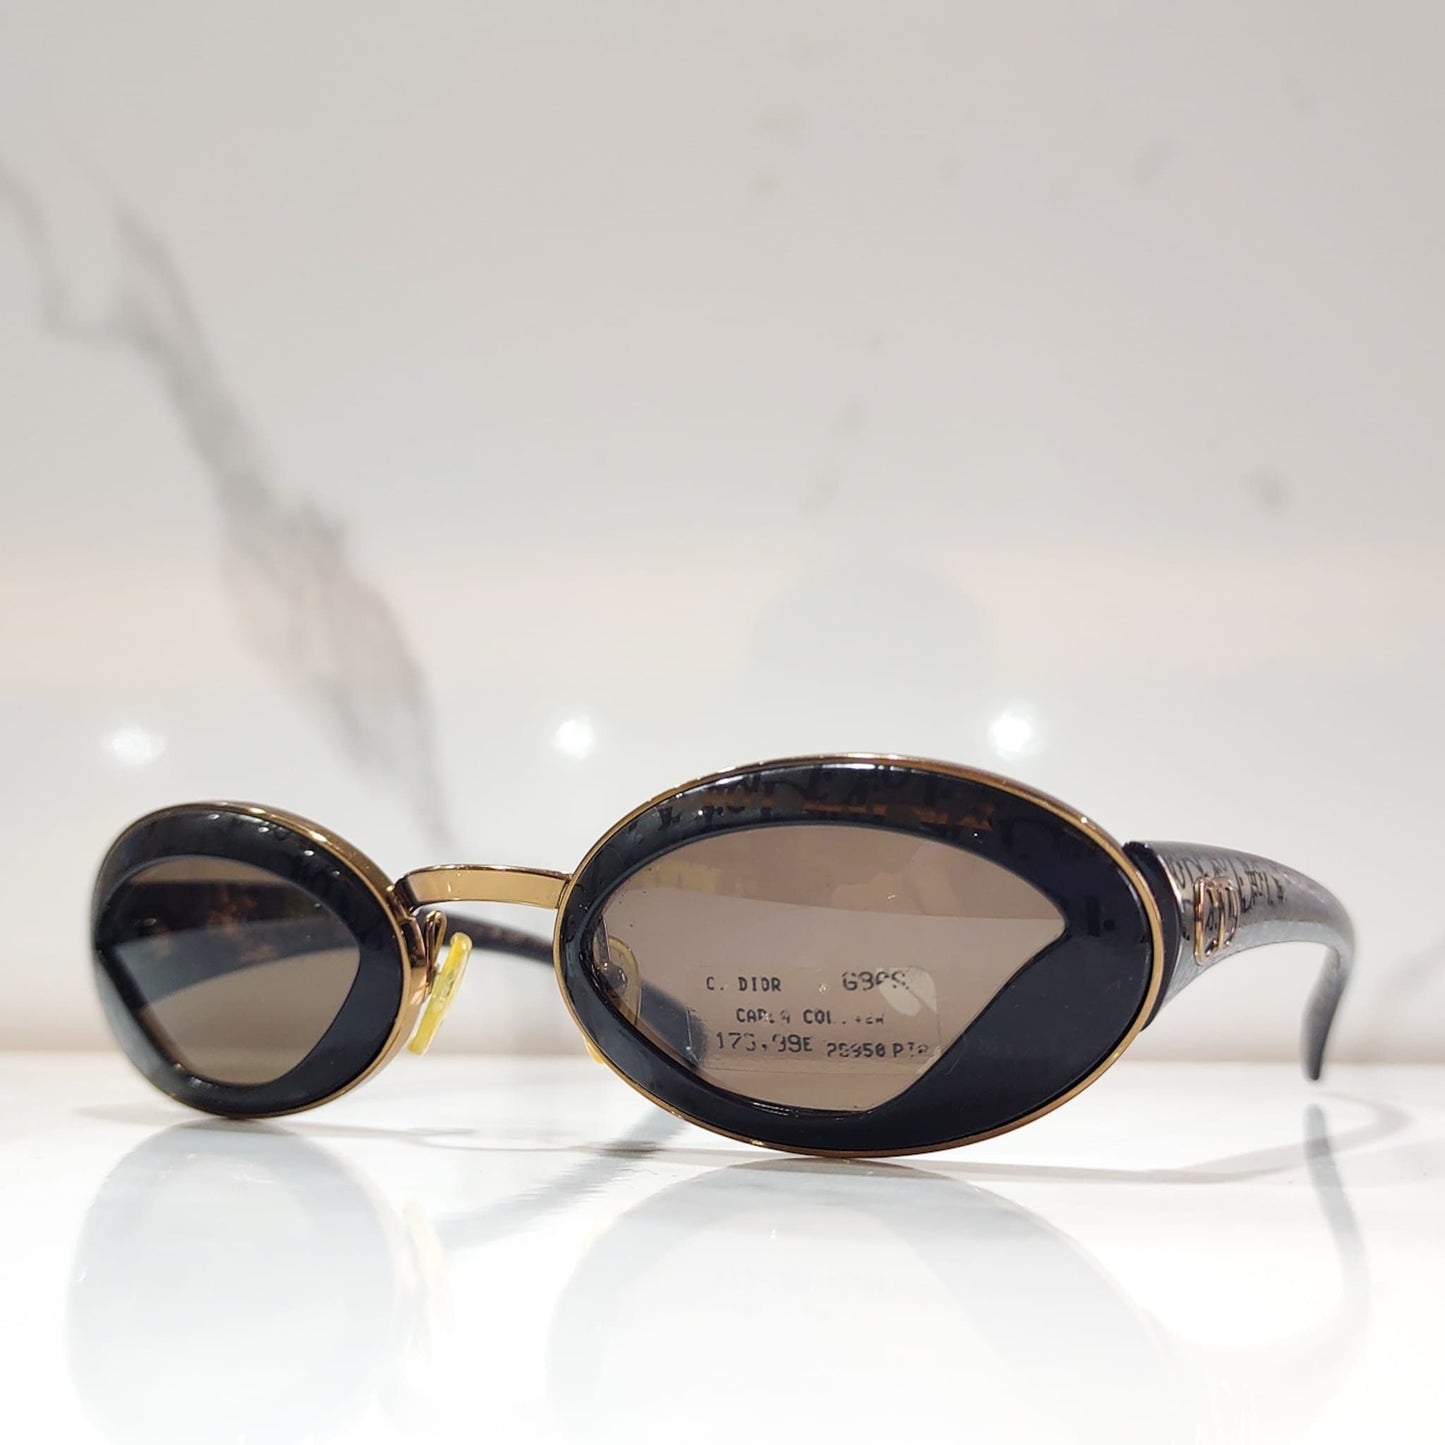 Dior Pin UP Rare Sunglasses Limited Edition vintage glasses lunette brille